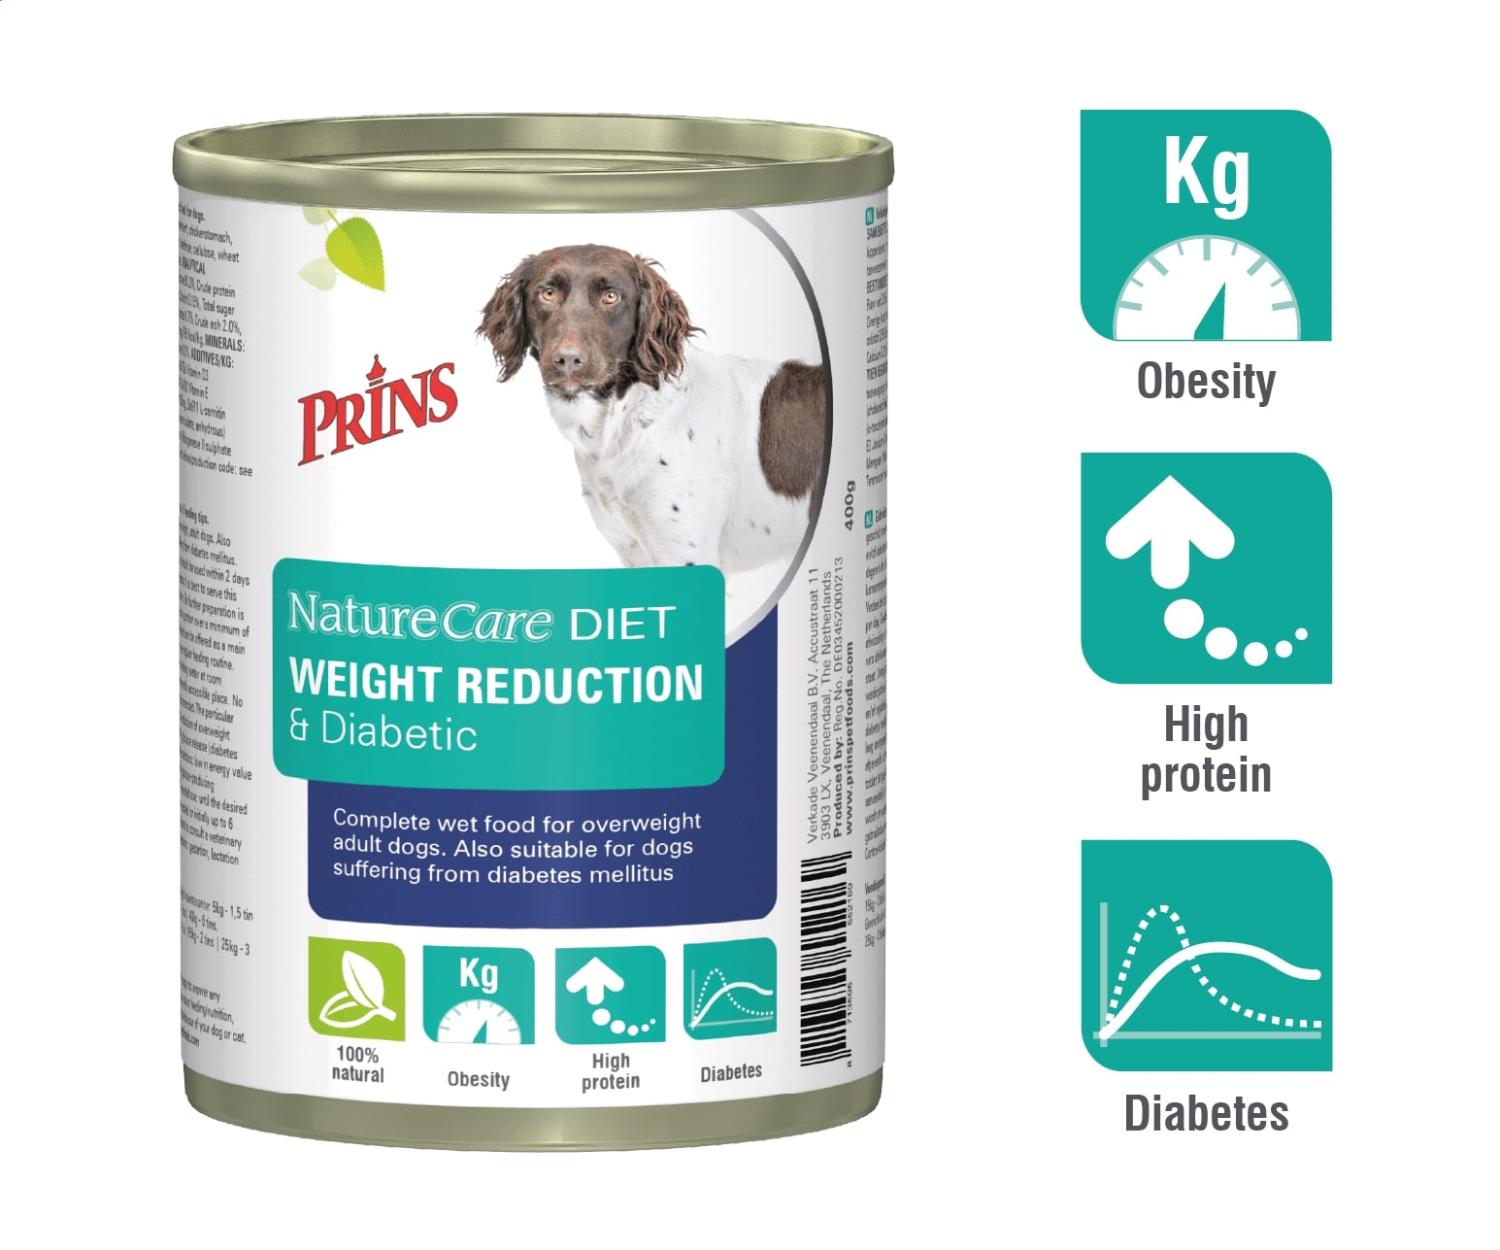 Prins NatureCare Diet Dog | WEIGHT REDUCTION & Diabetic wetfood 400g